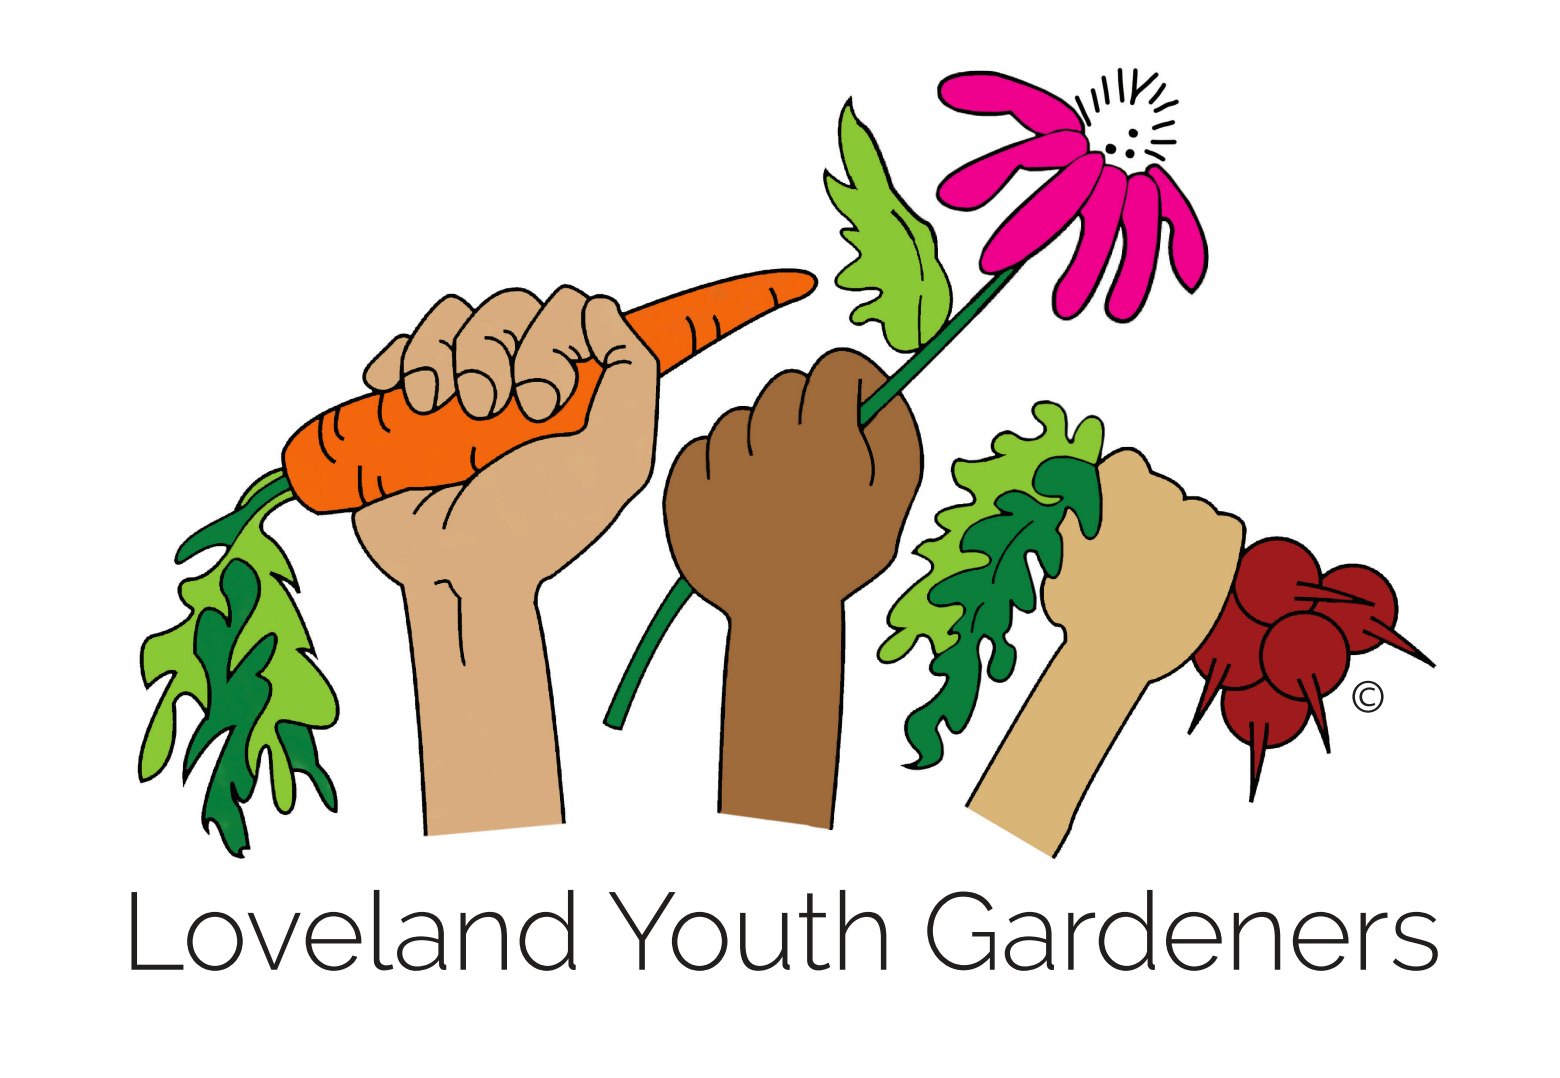 Loveland Youth Gardeners